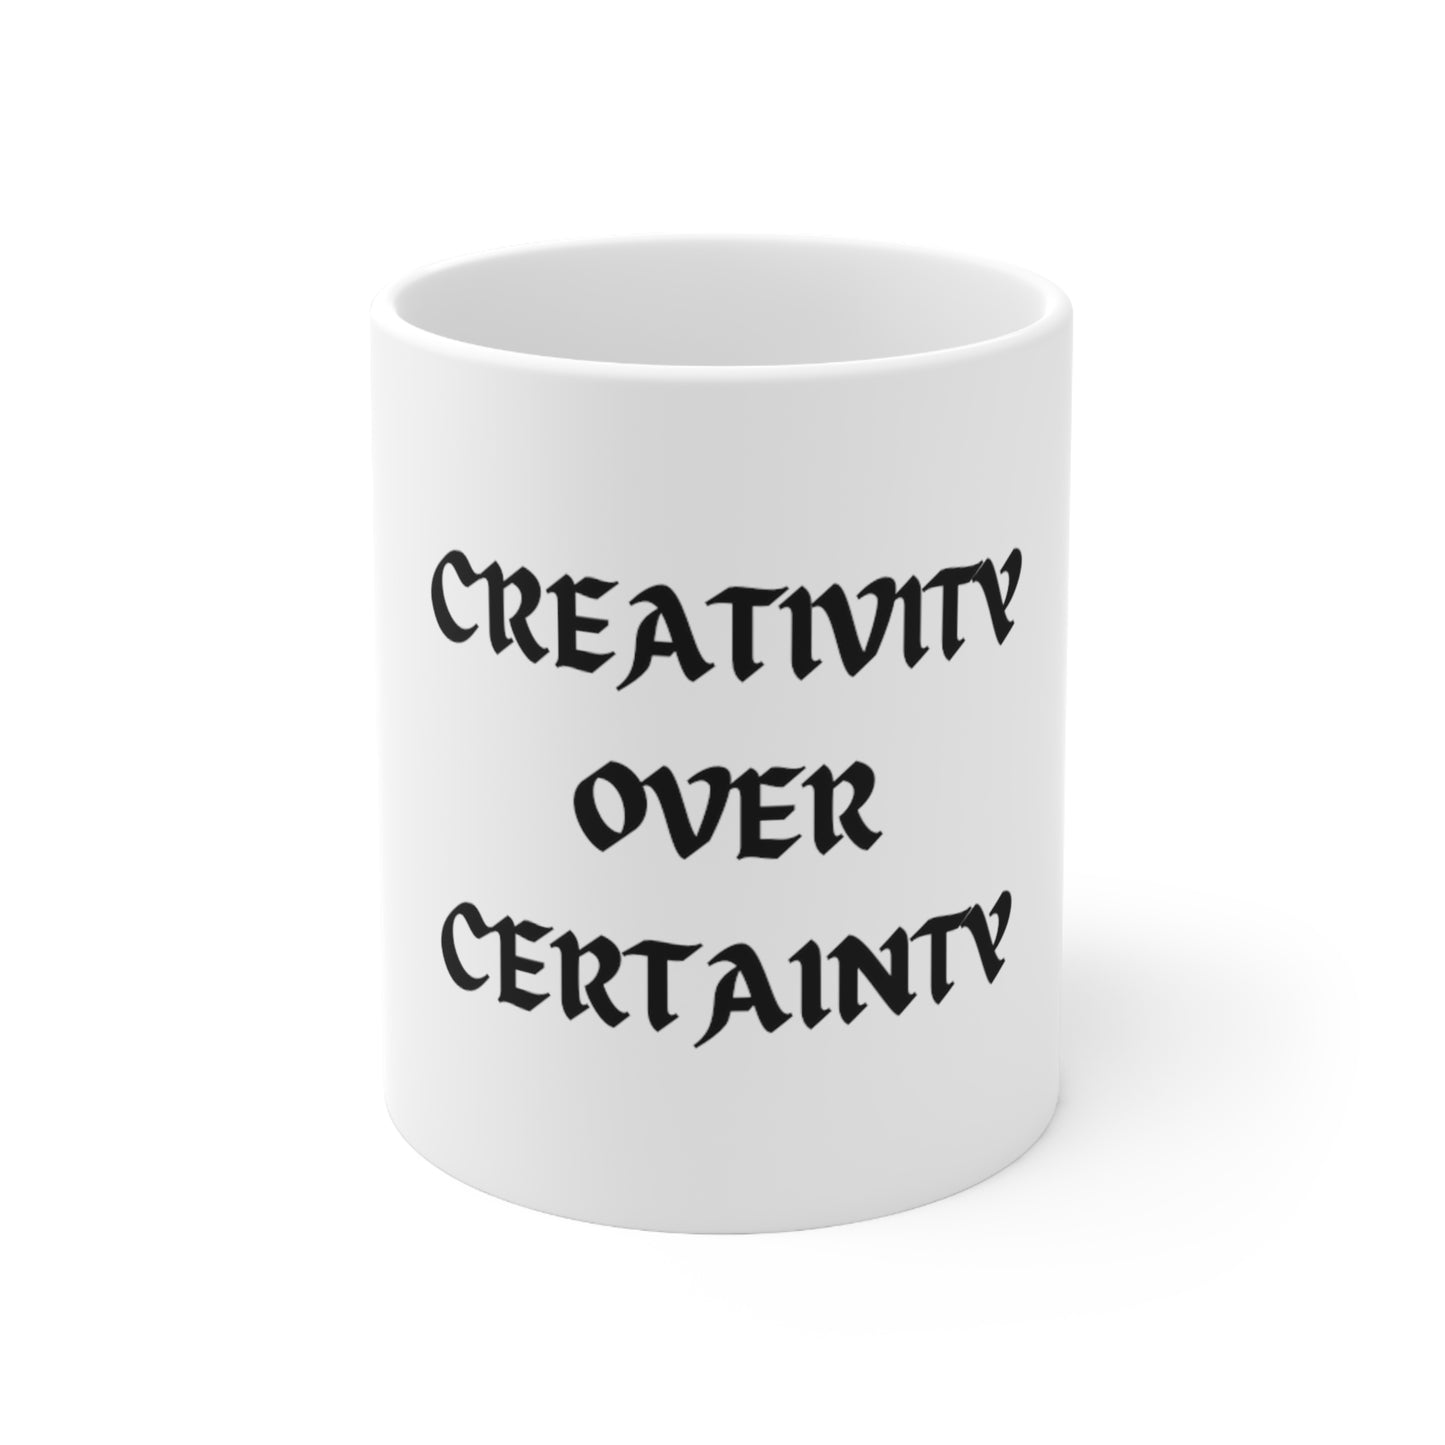 Creativity over Certainty White Ceramic Mug 11oz